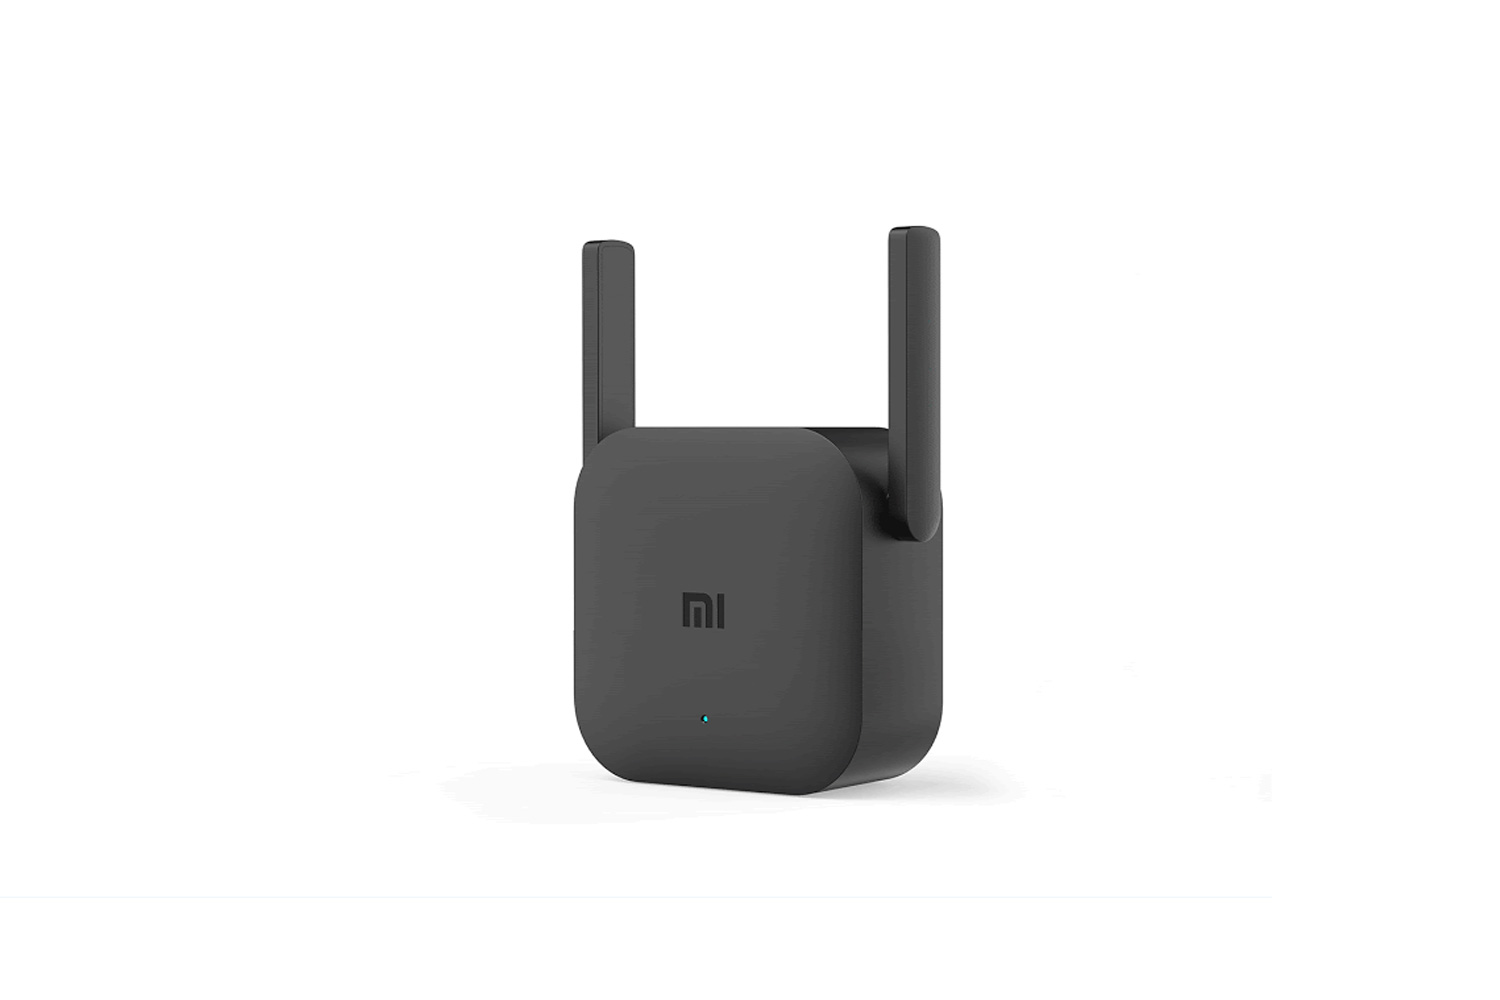 Mi Wi-Fi Range Extender Pro